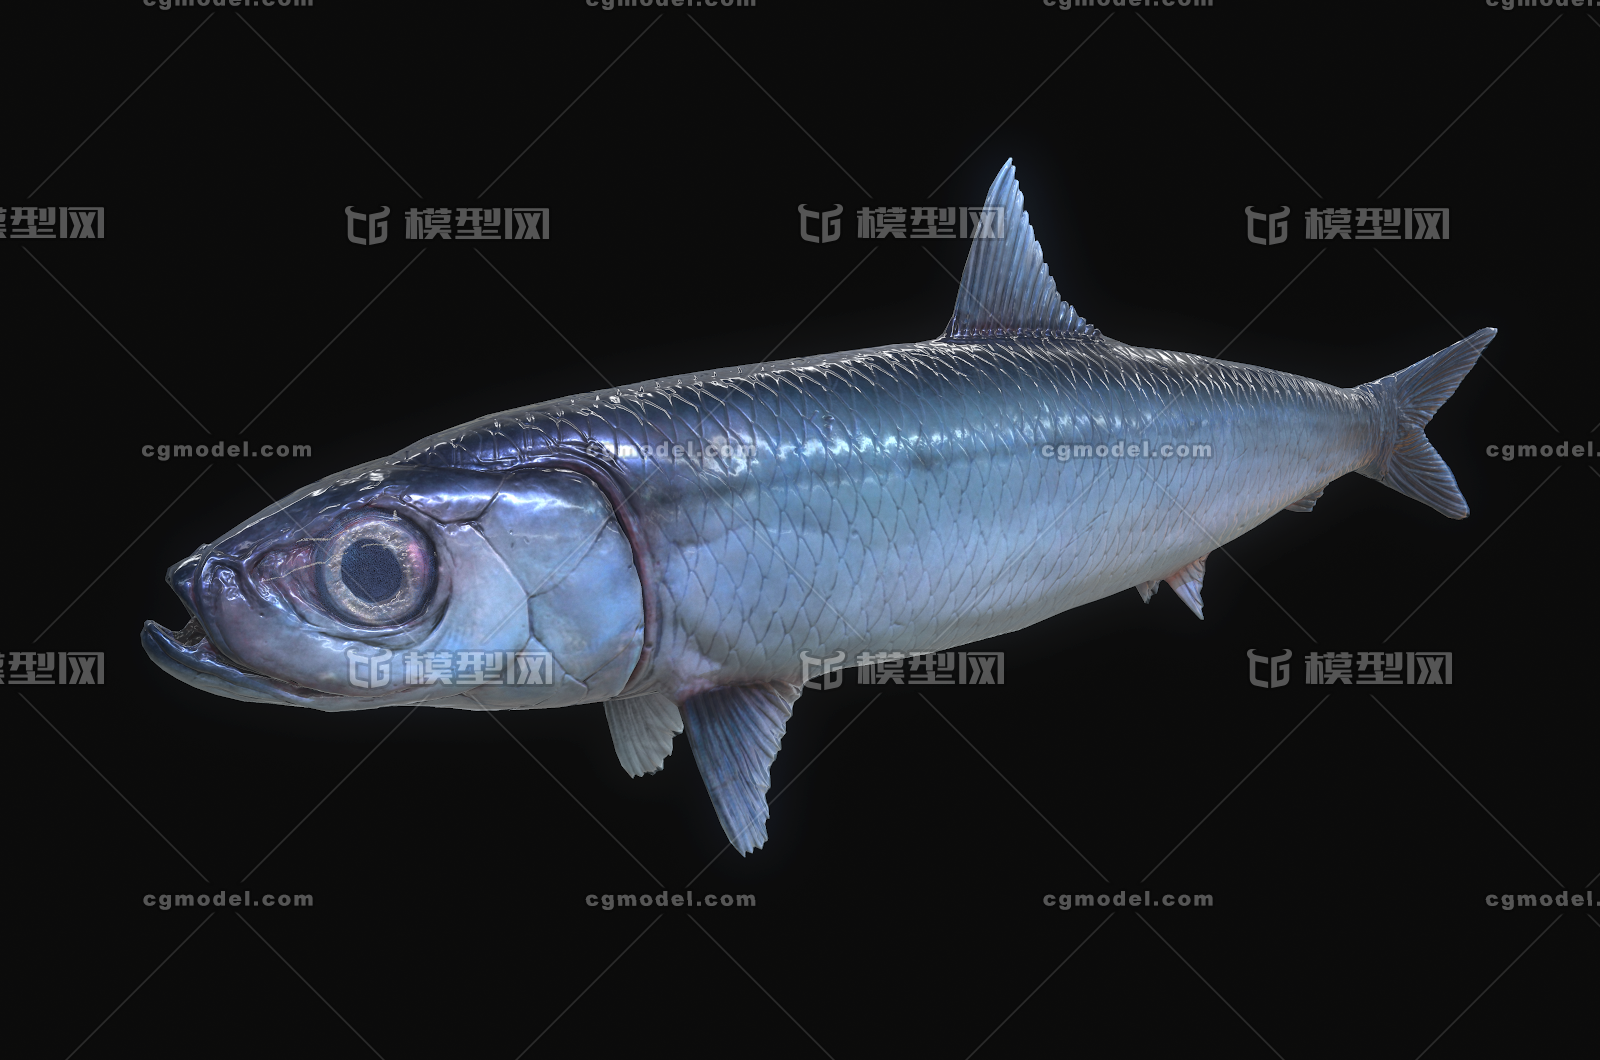 044 pbr次世代 鲱鱼 鲭鱼 鲐鱼 马鲛鱼 青鱼 草鱼 鲑鱼 鲷鱼 马哈鱼